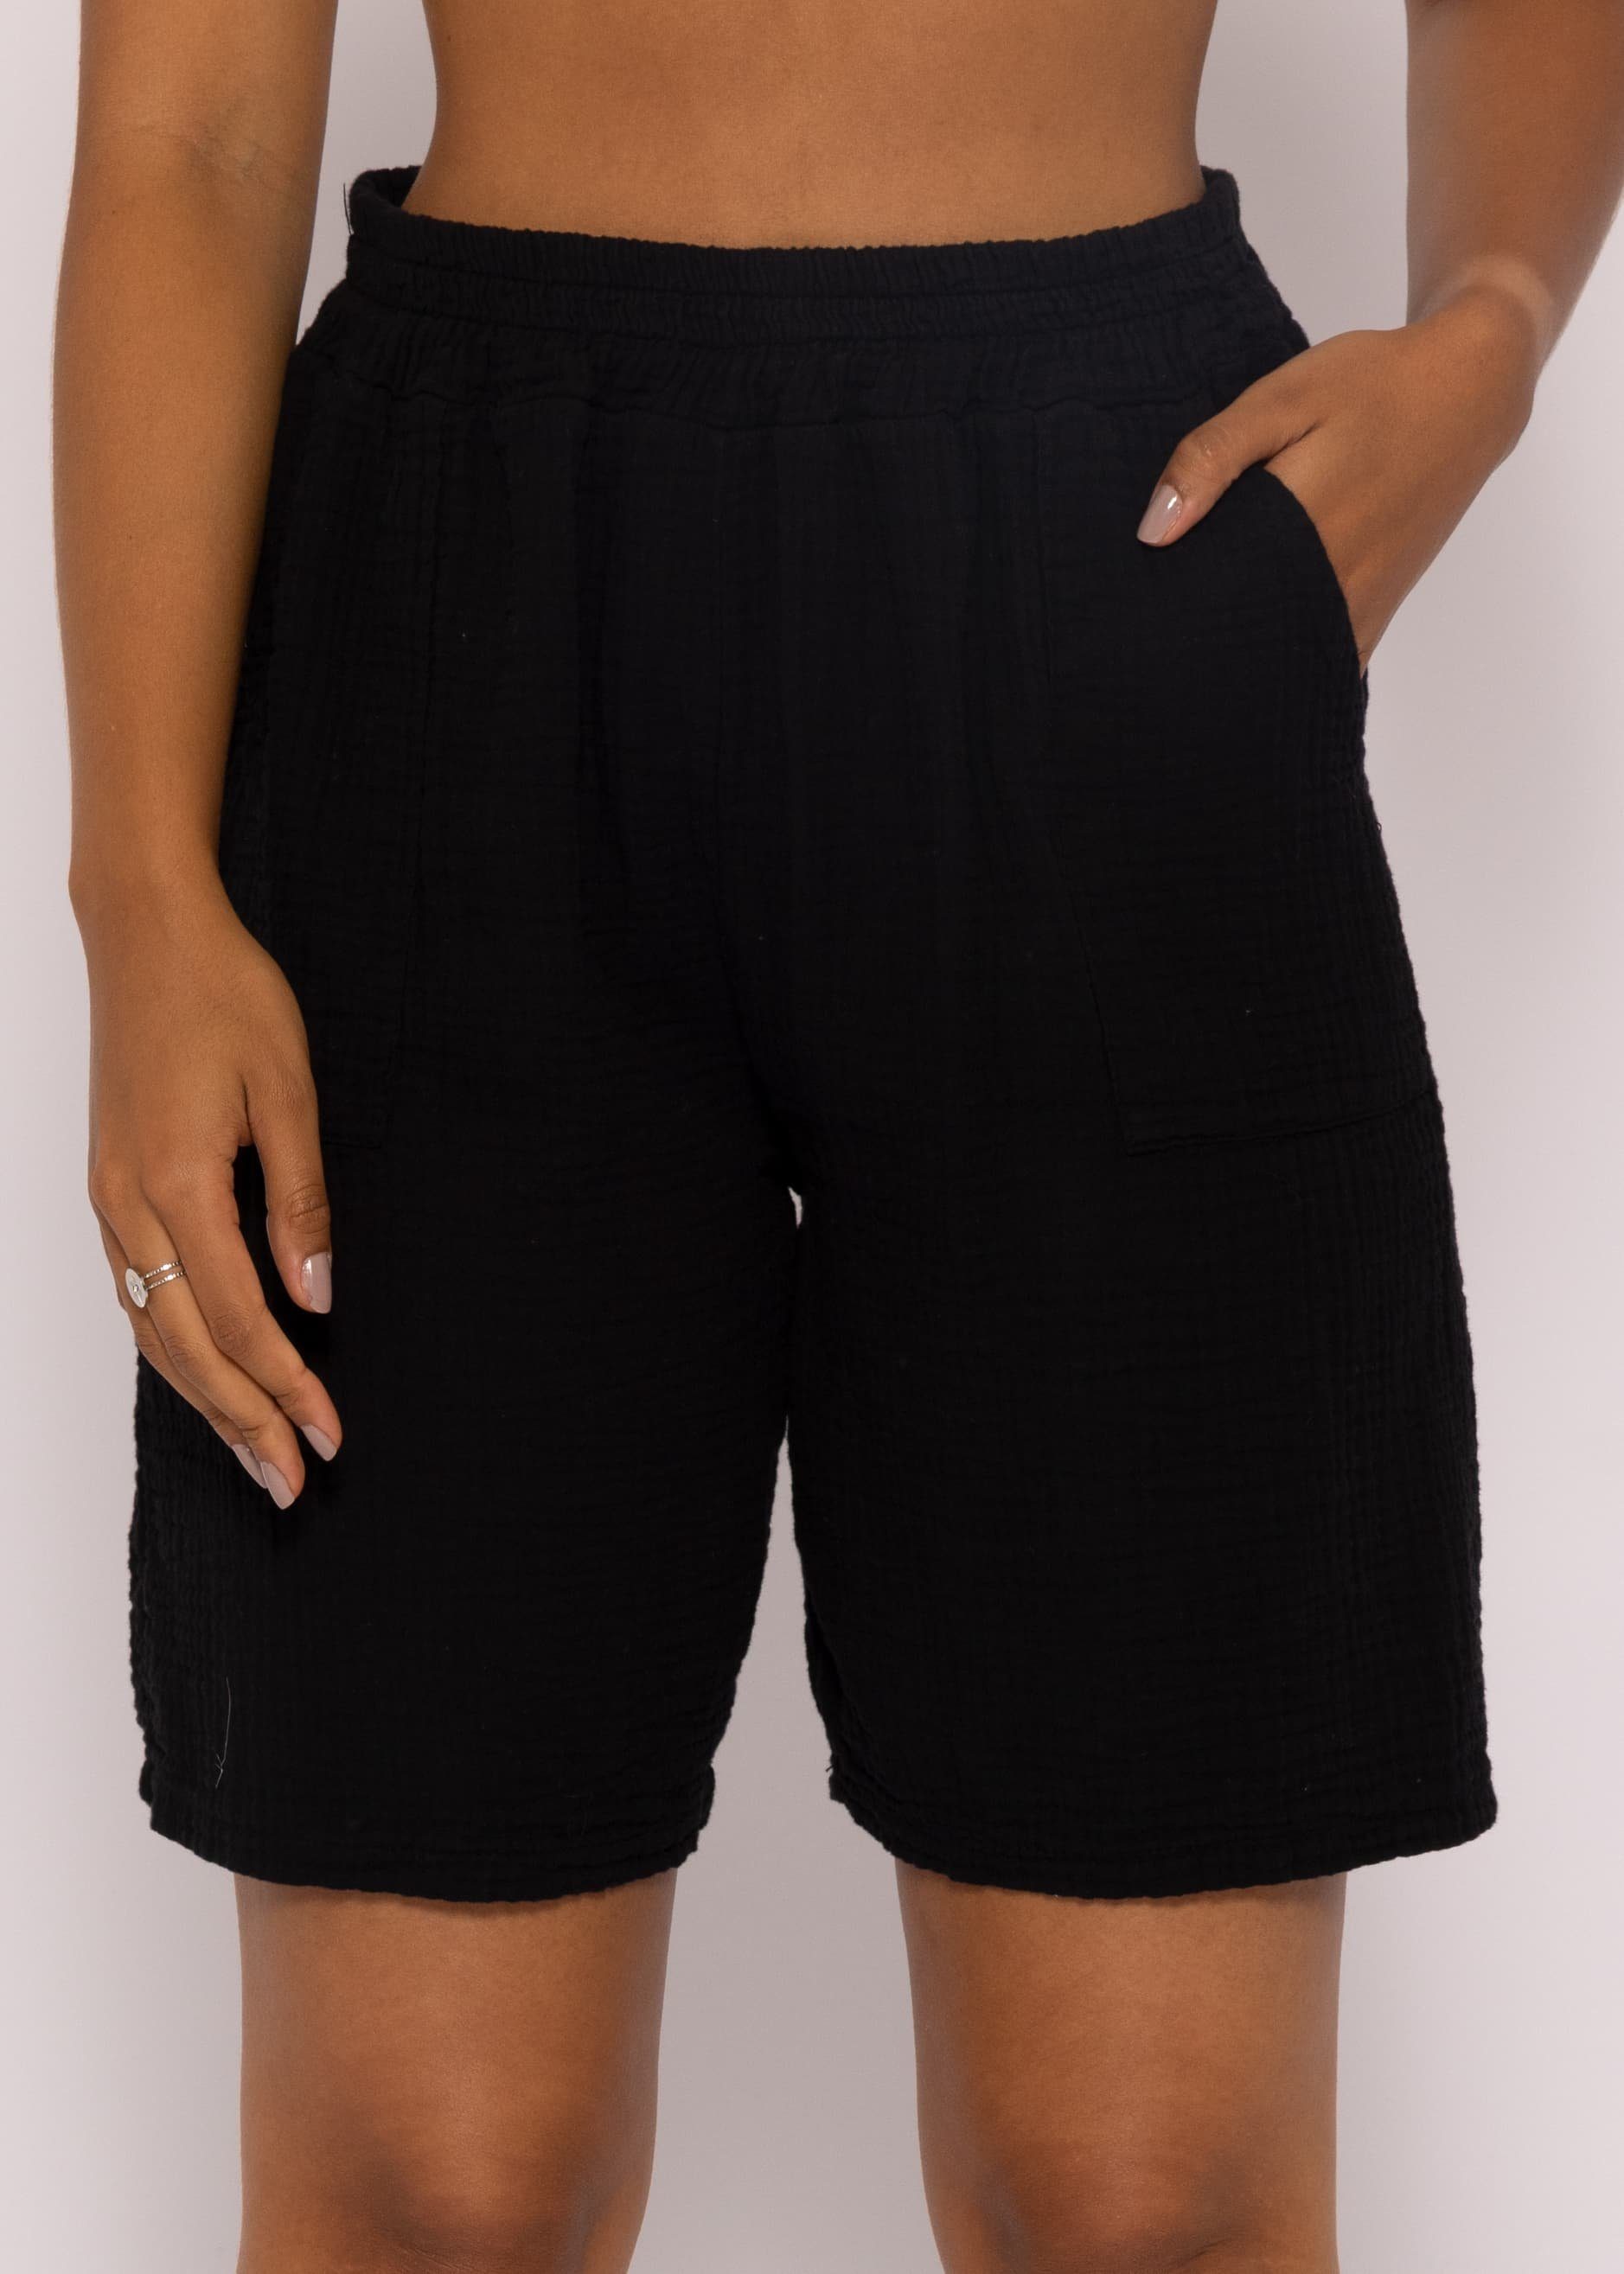 SASSYCLASSY Bermudas Musselin Sommer Hose Damen Kurz - Shorts Damen 100 % Baumwolle (Musselin), atmungsaktiv, sehr leicht, Made in Italy